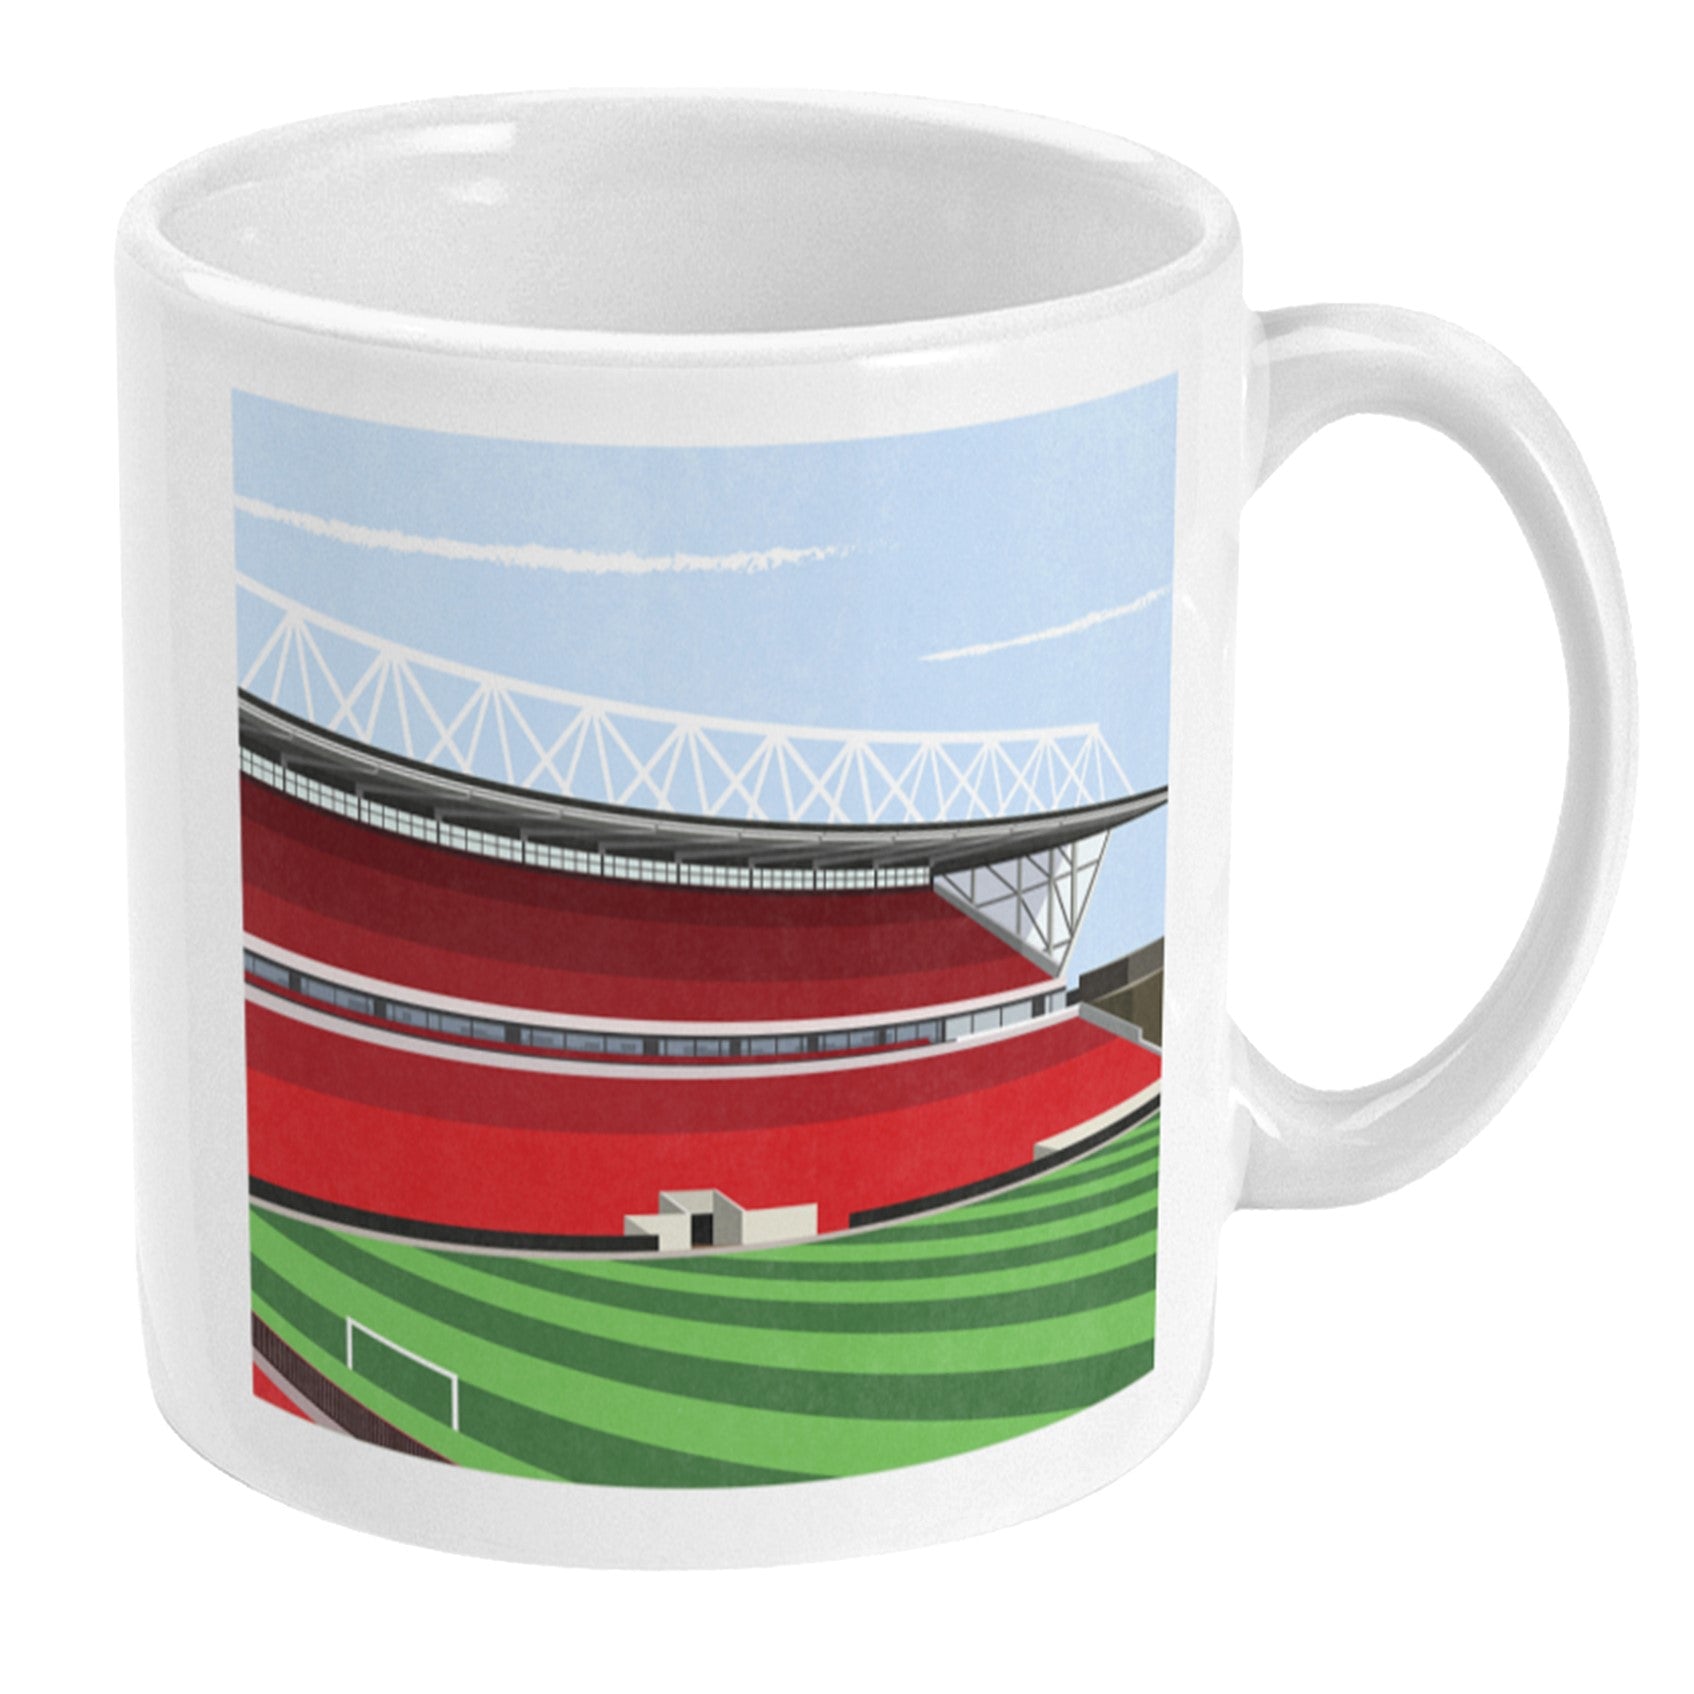 Bristol City mug featuring an illustration Ashton Gate